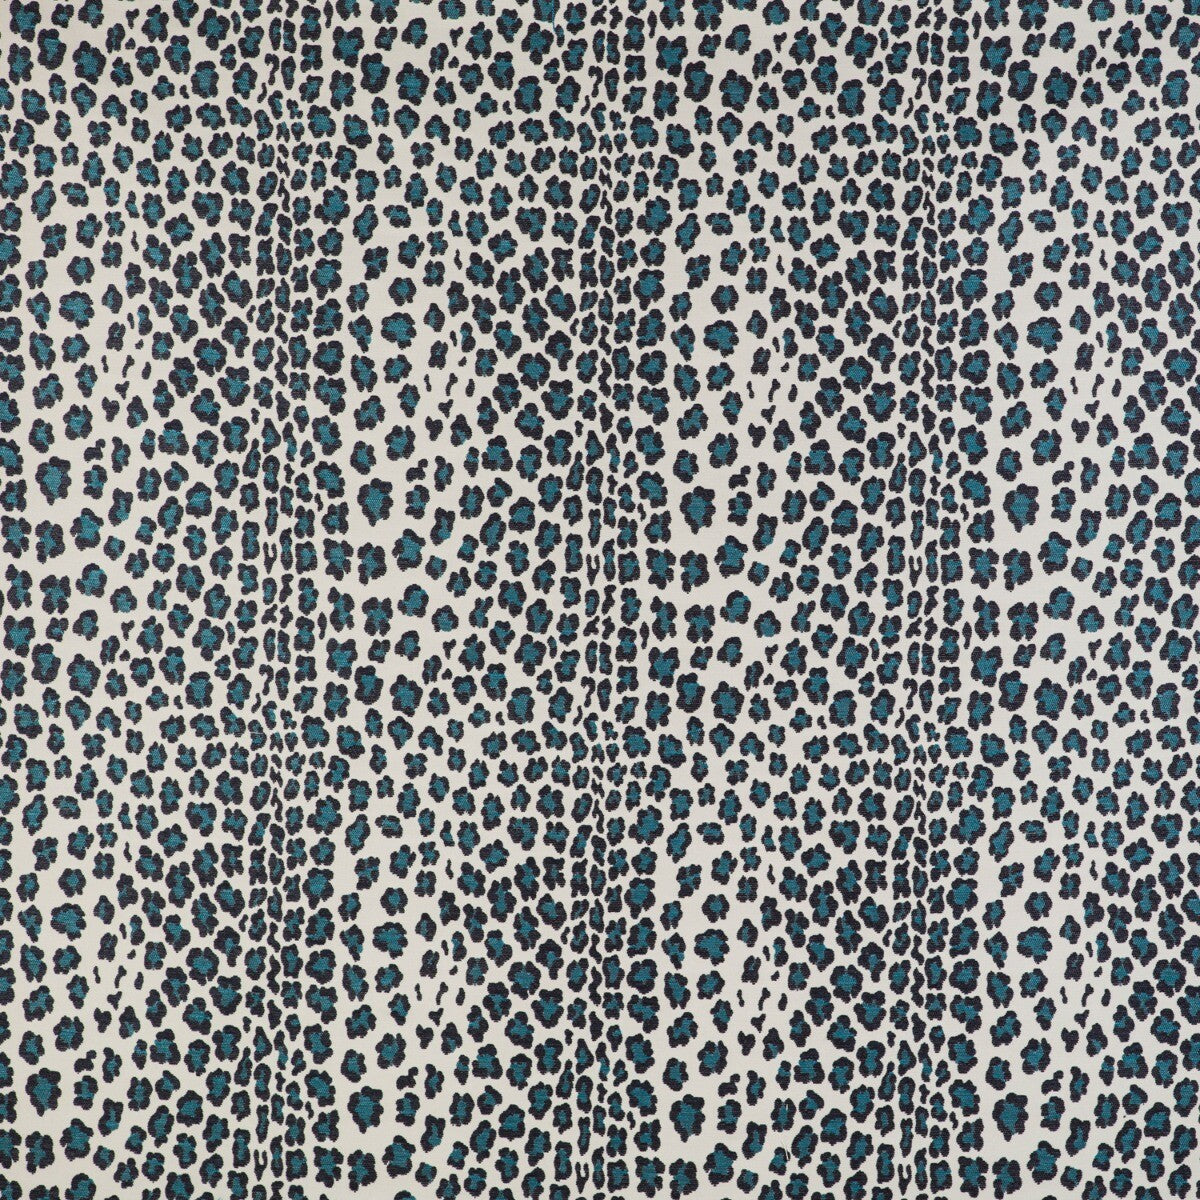 Leopardo fabric in azul color - pattern GDT5515.001.0 - by Gaston y Daniela in the Gaston Libreria collection